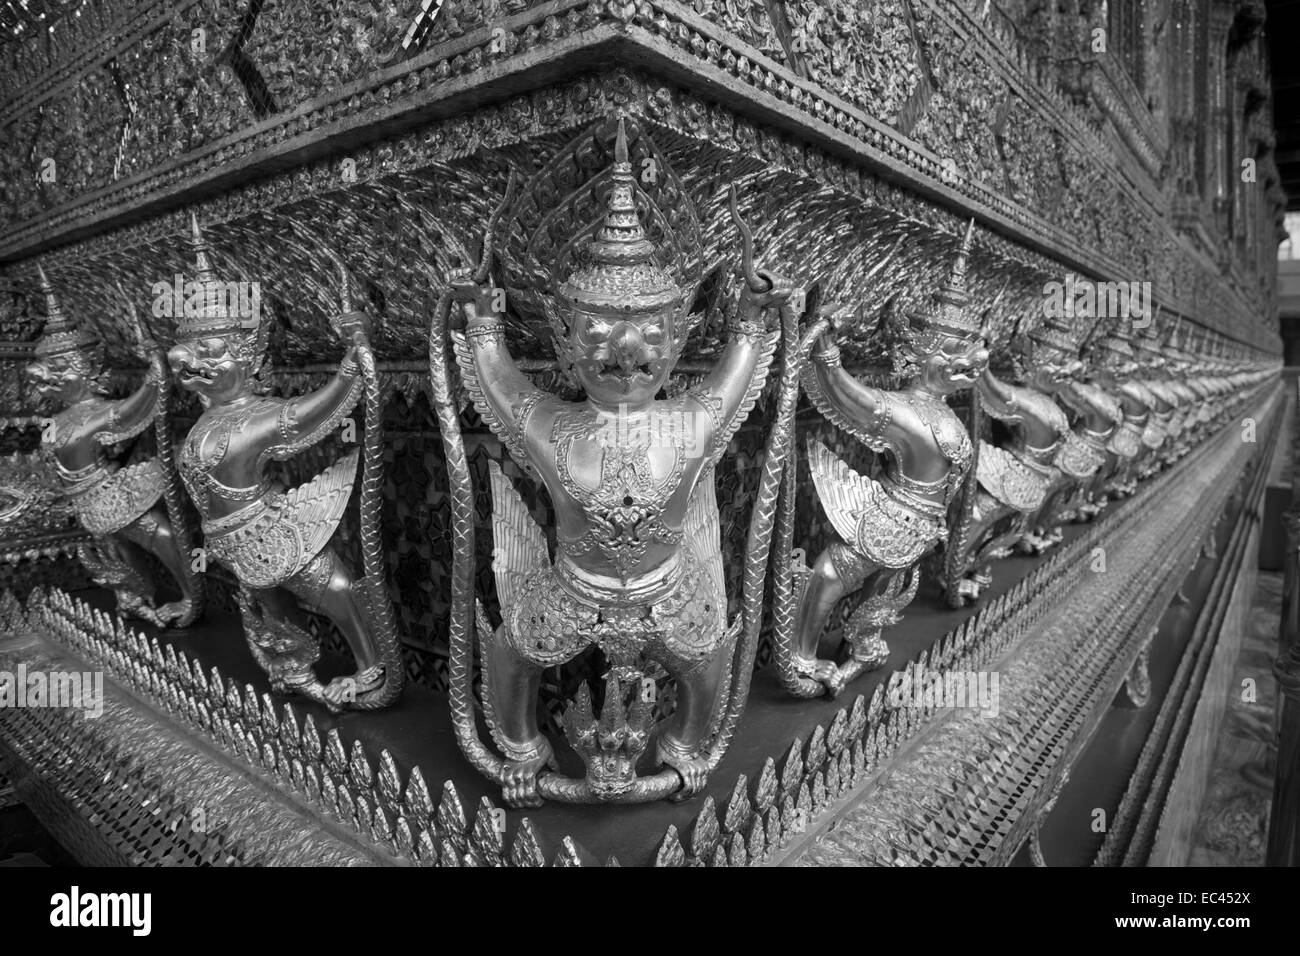 Fabelwesen im königlichen Palast, Bangkok, Thailand Stockfoto